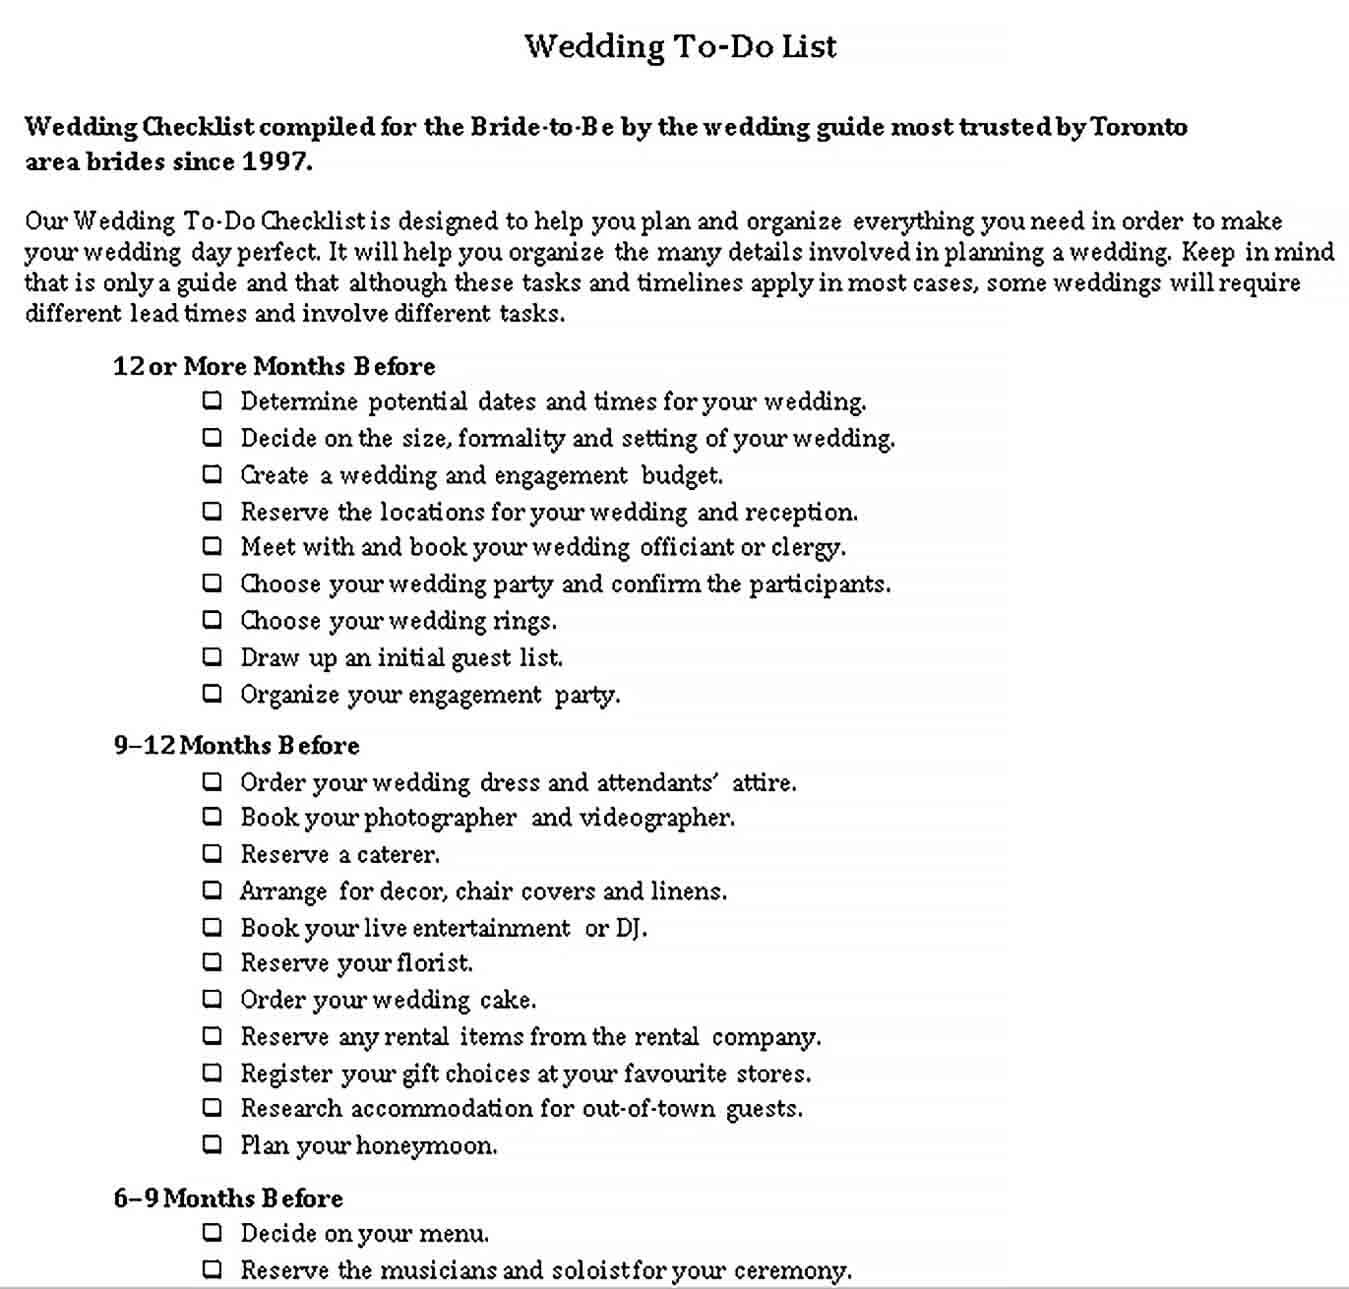 Sample Wedding To Do List 1